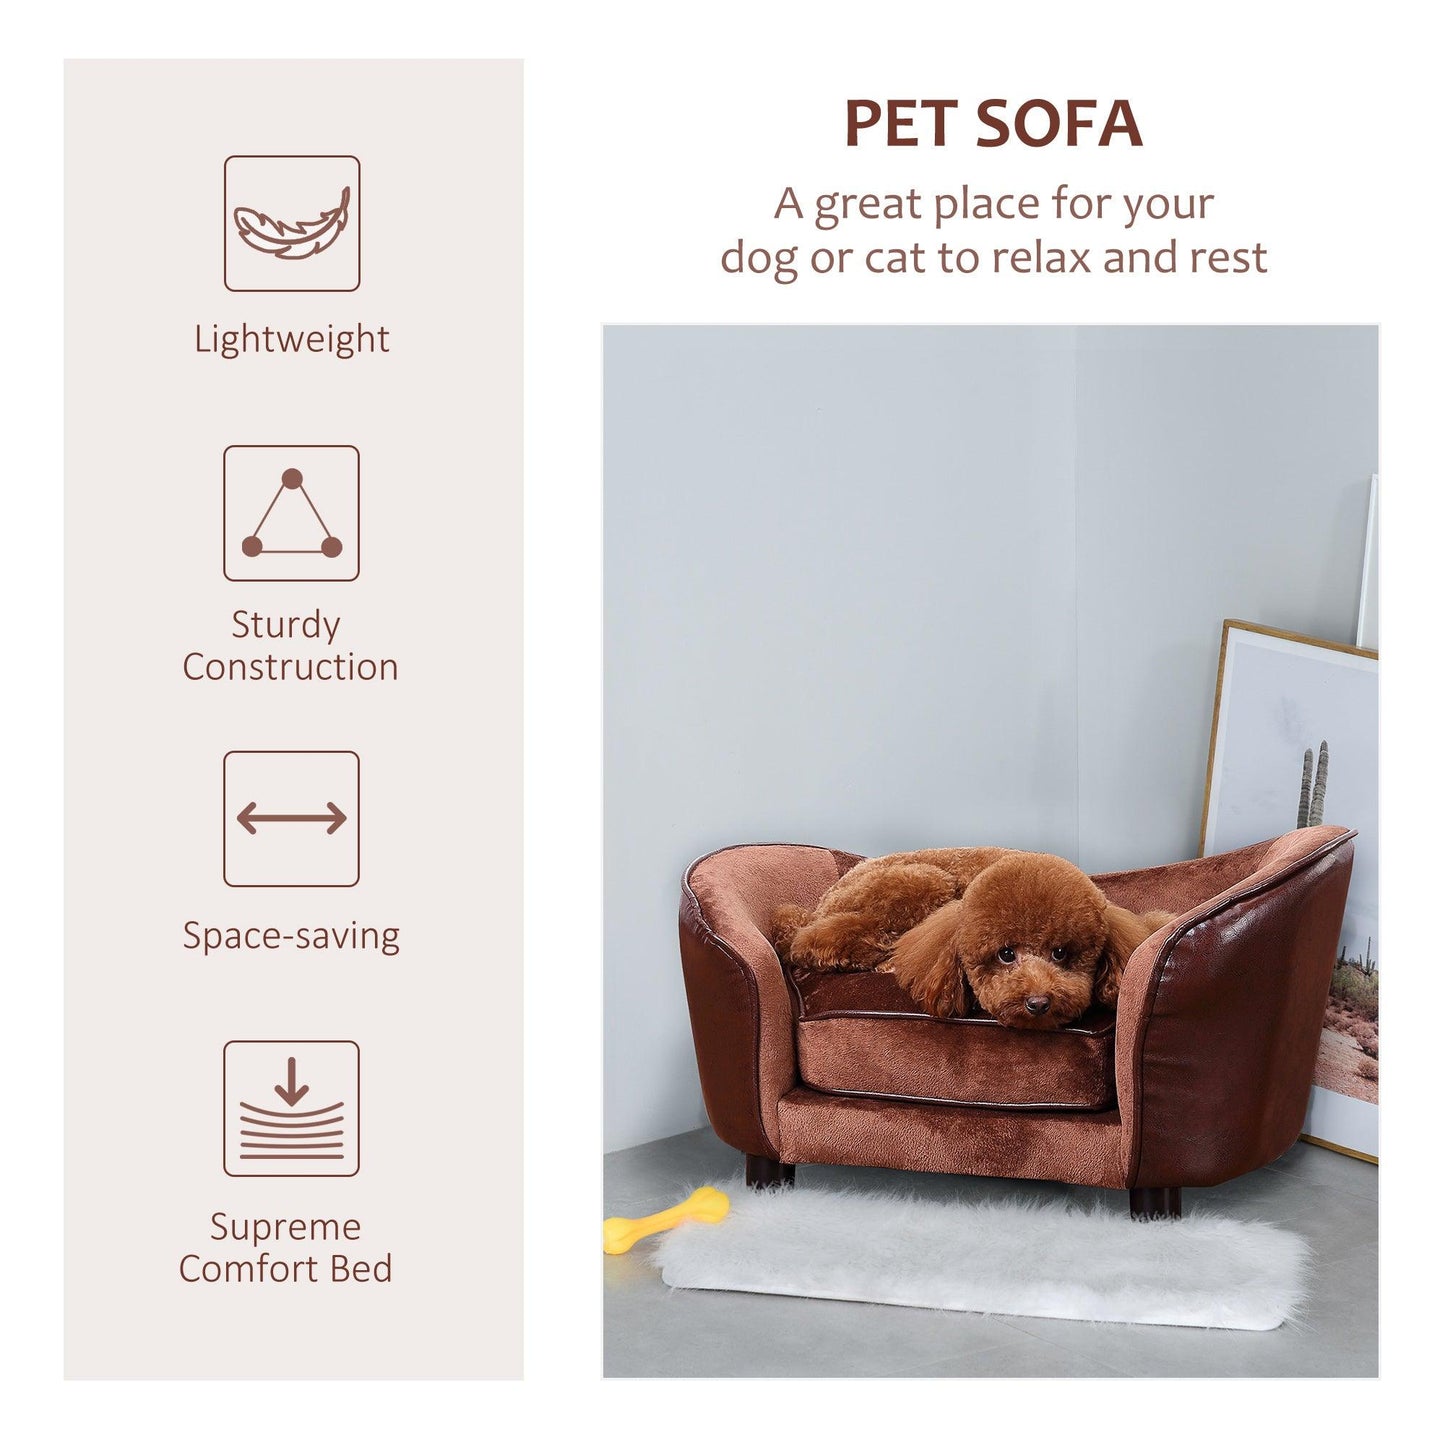 PawHut Dog Sofa Chair W/ Legs Cushion for XS Dog Cat 68.5x40.5x40.5 cm, Brown - ALL4U RETAILER LTD